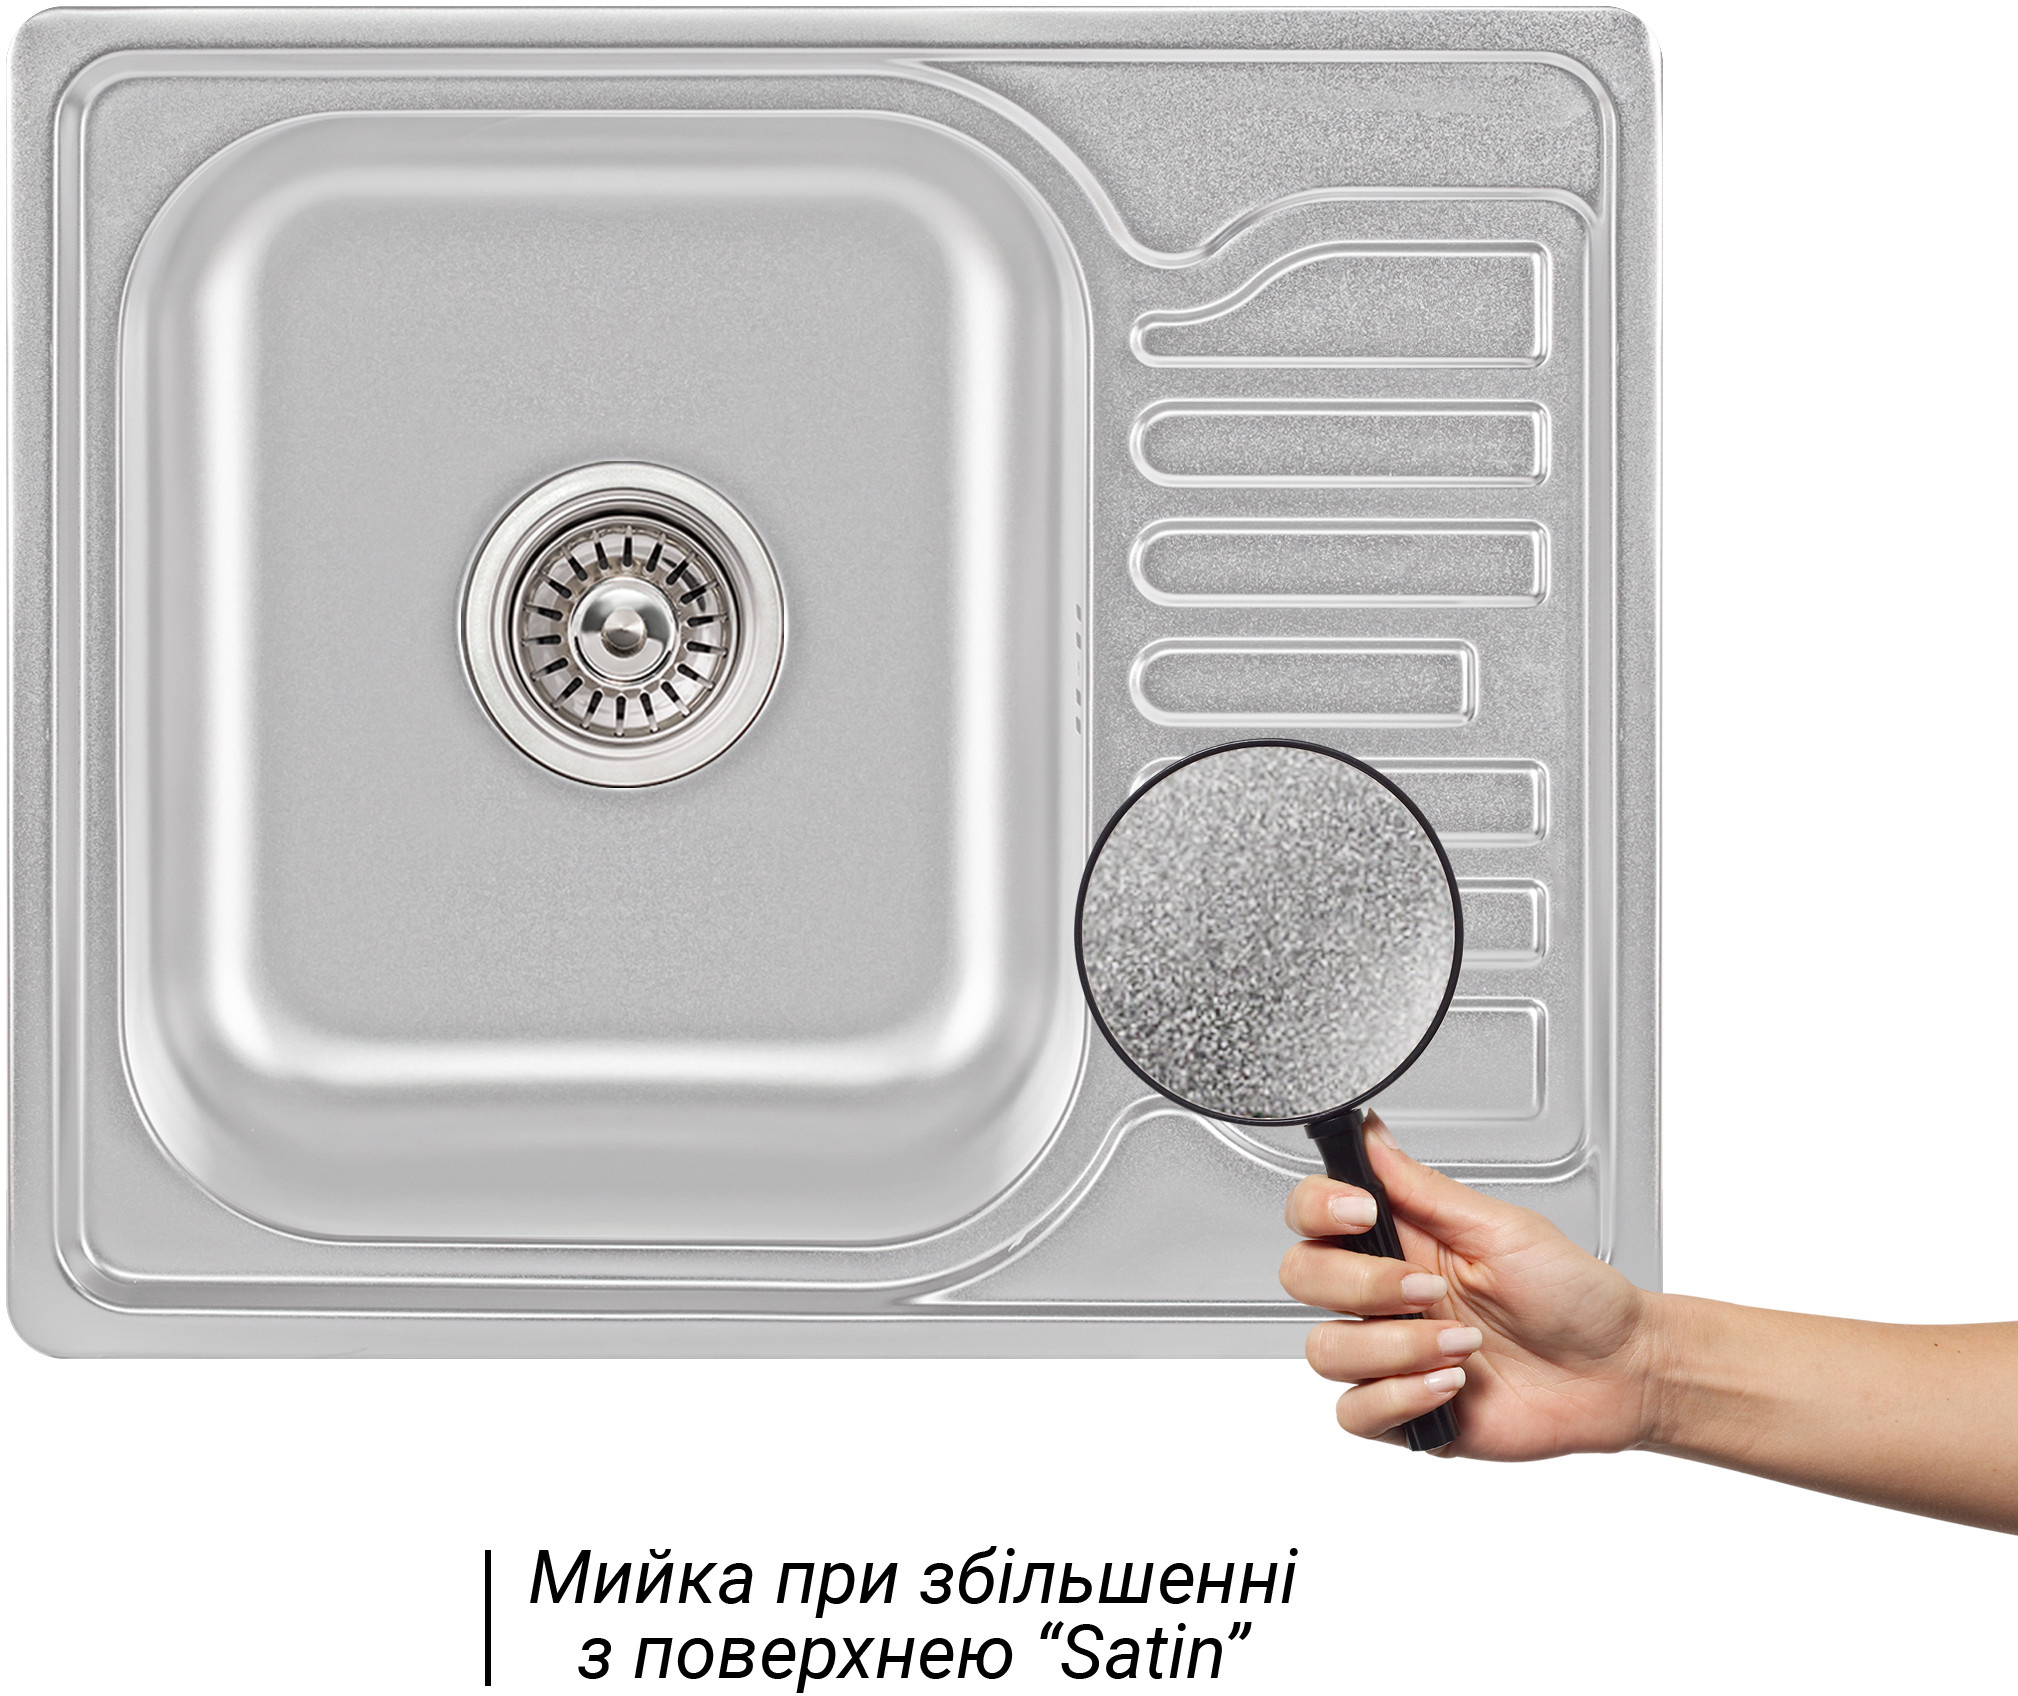 Кухонная мойка Lidz 5848 0,8 мм Satin (LIDZ5848SAT) цена 1162 грн - фотография 2